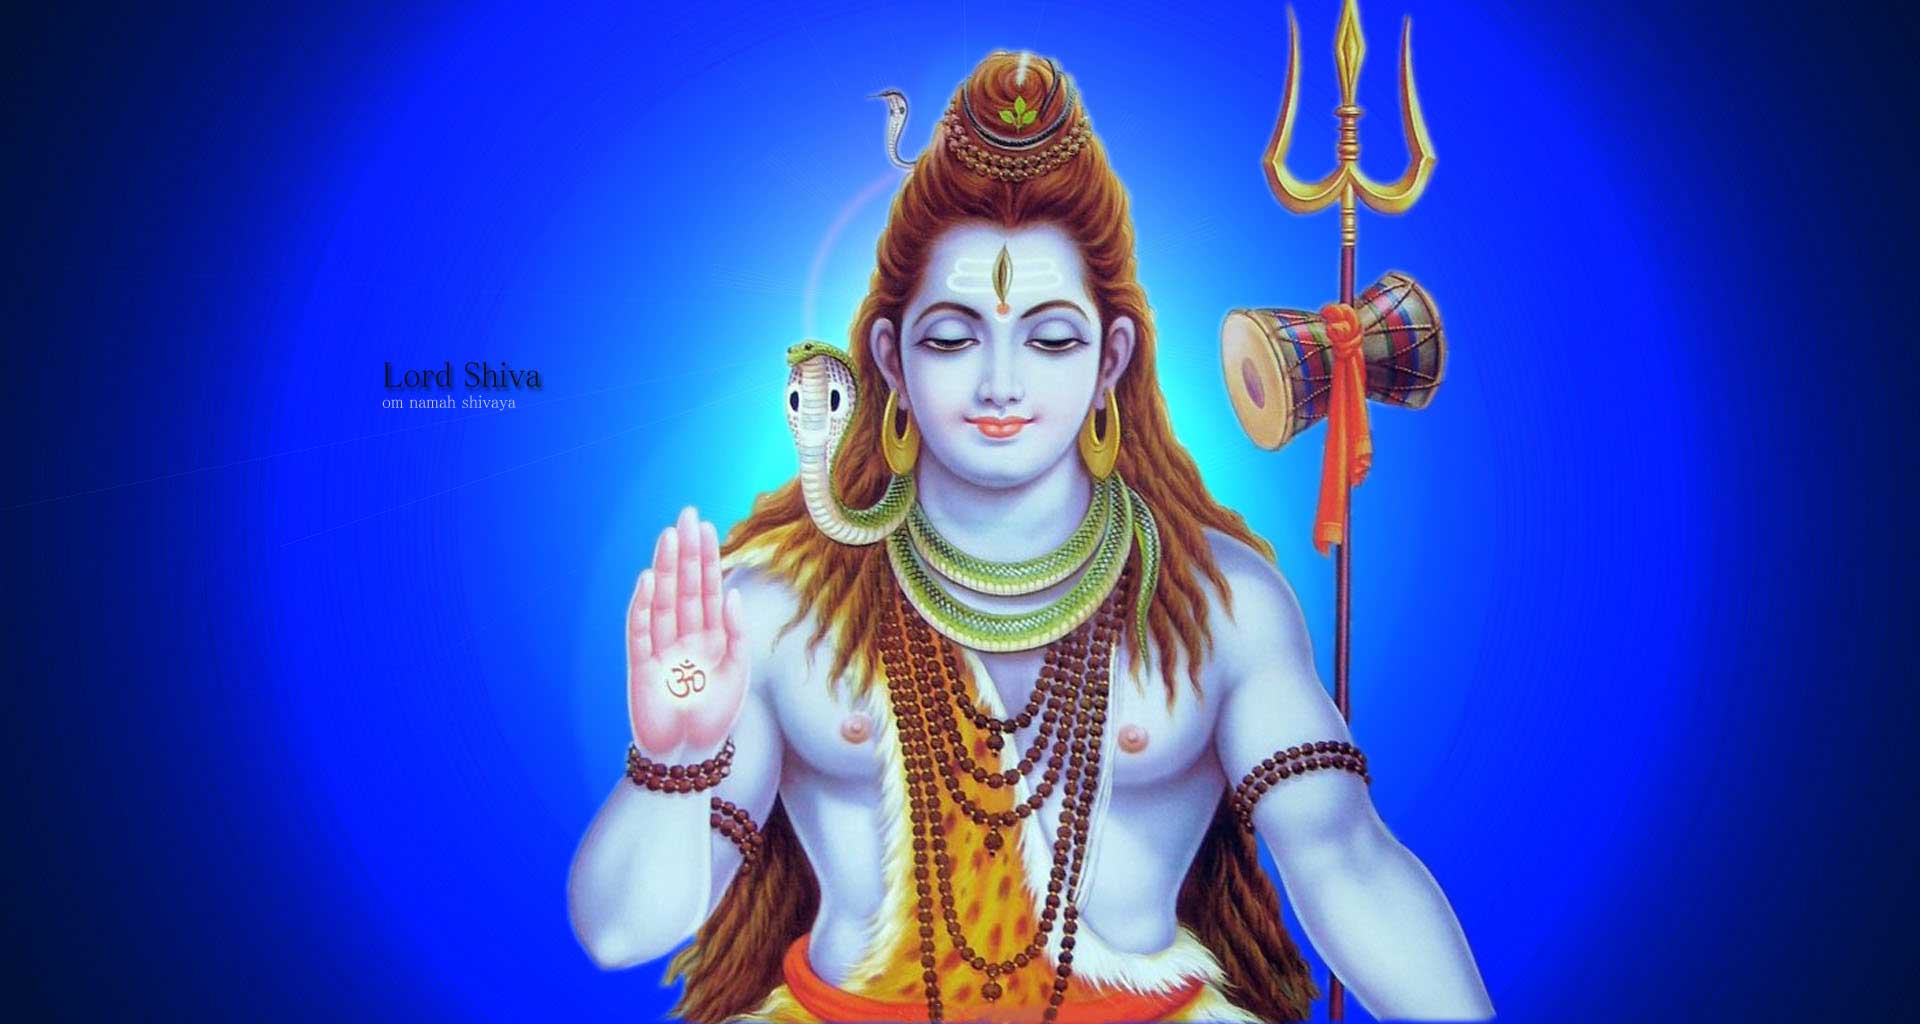 God Shiva HD Wallpaper, Photo & Images download